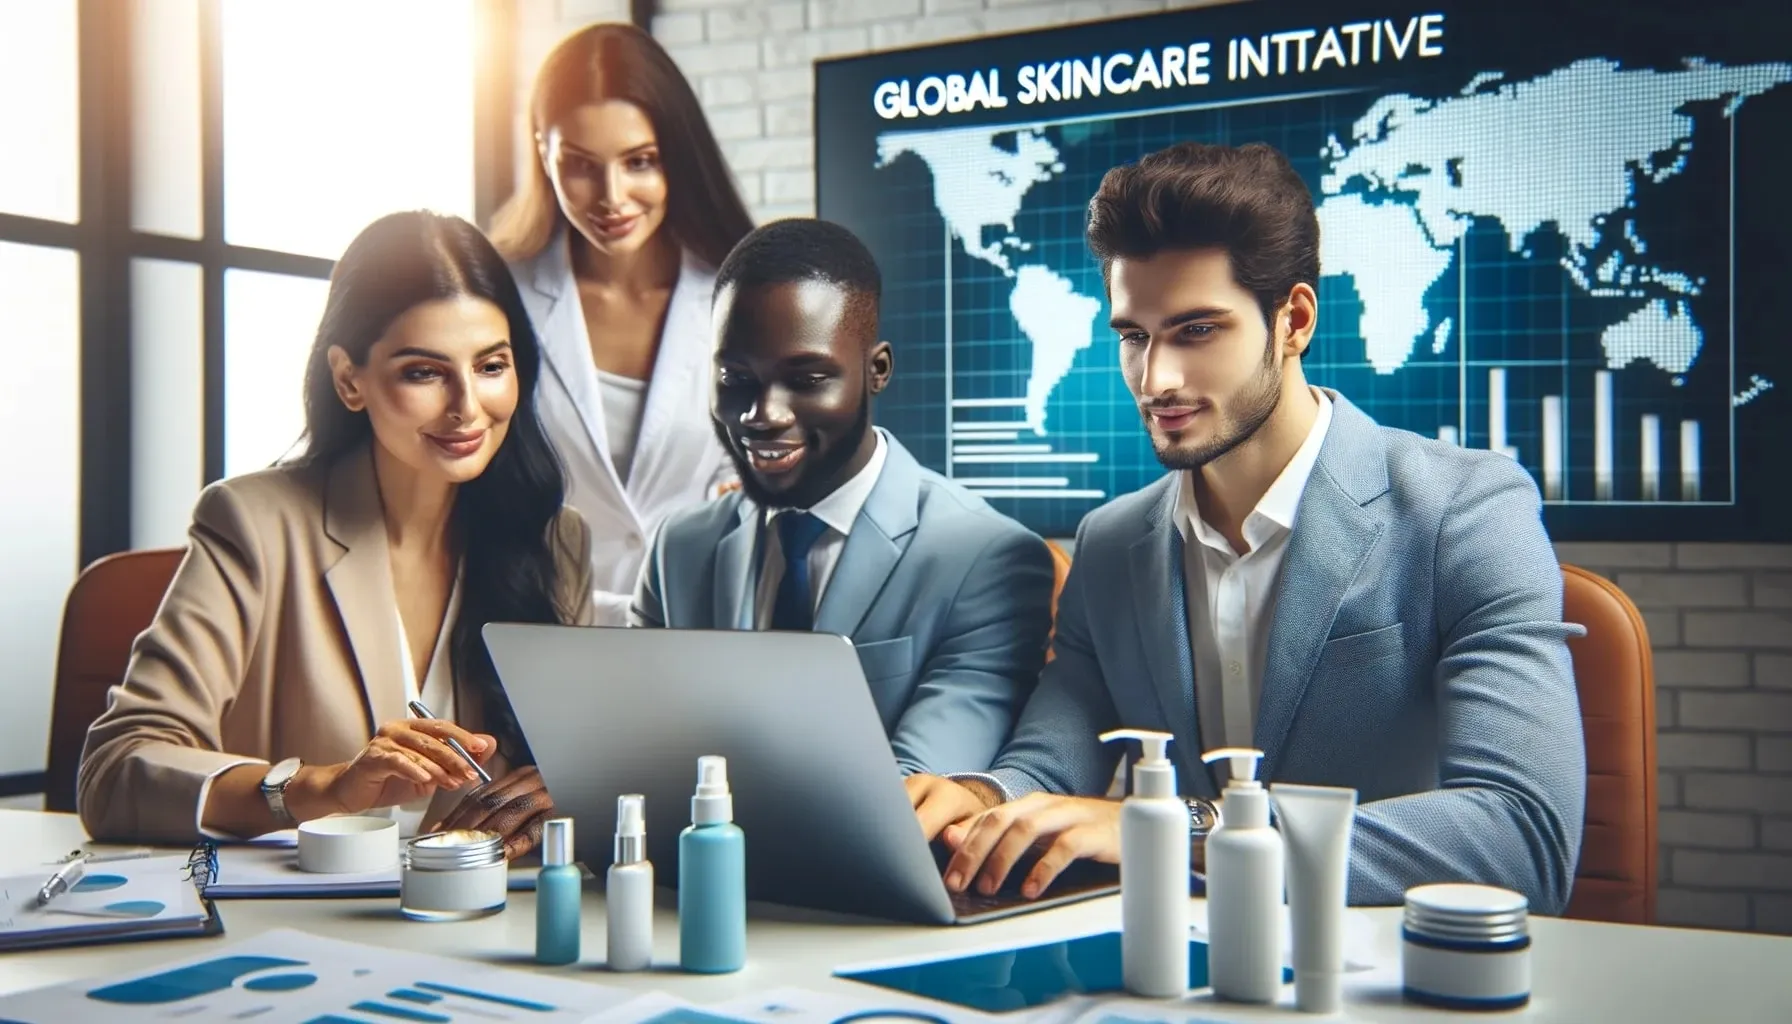 Providing Skin Care Advice Around the Globe